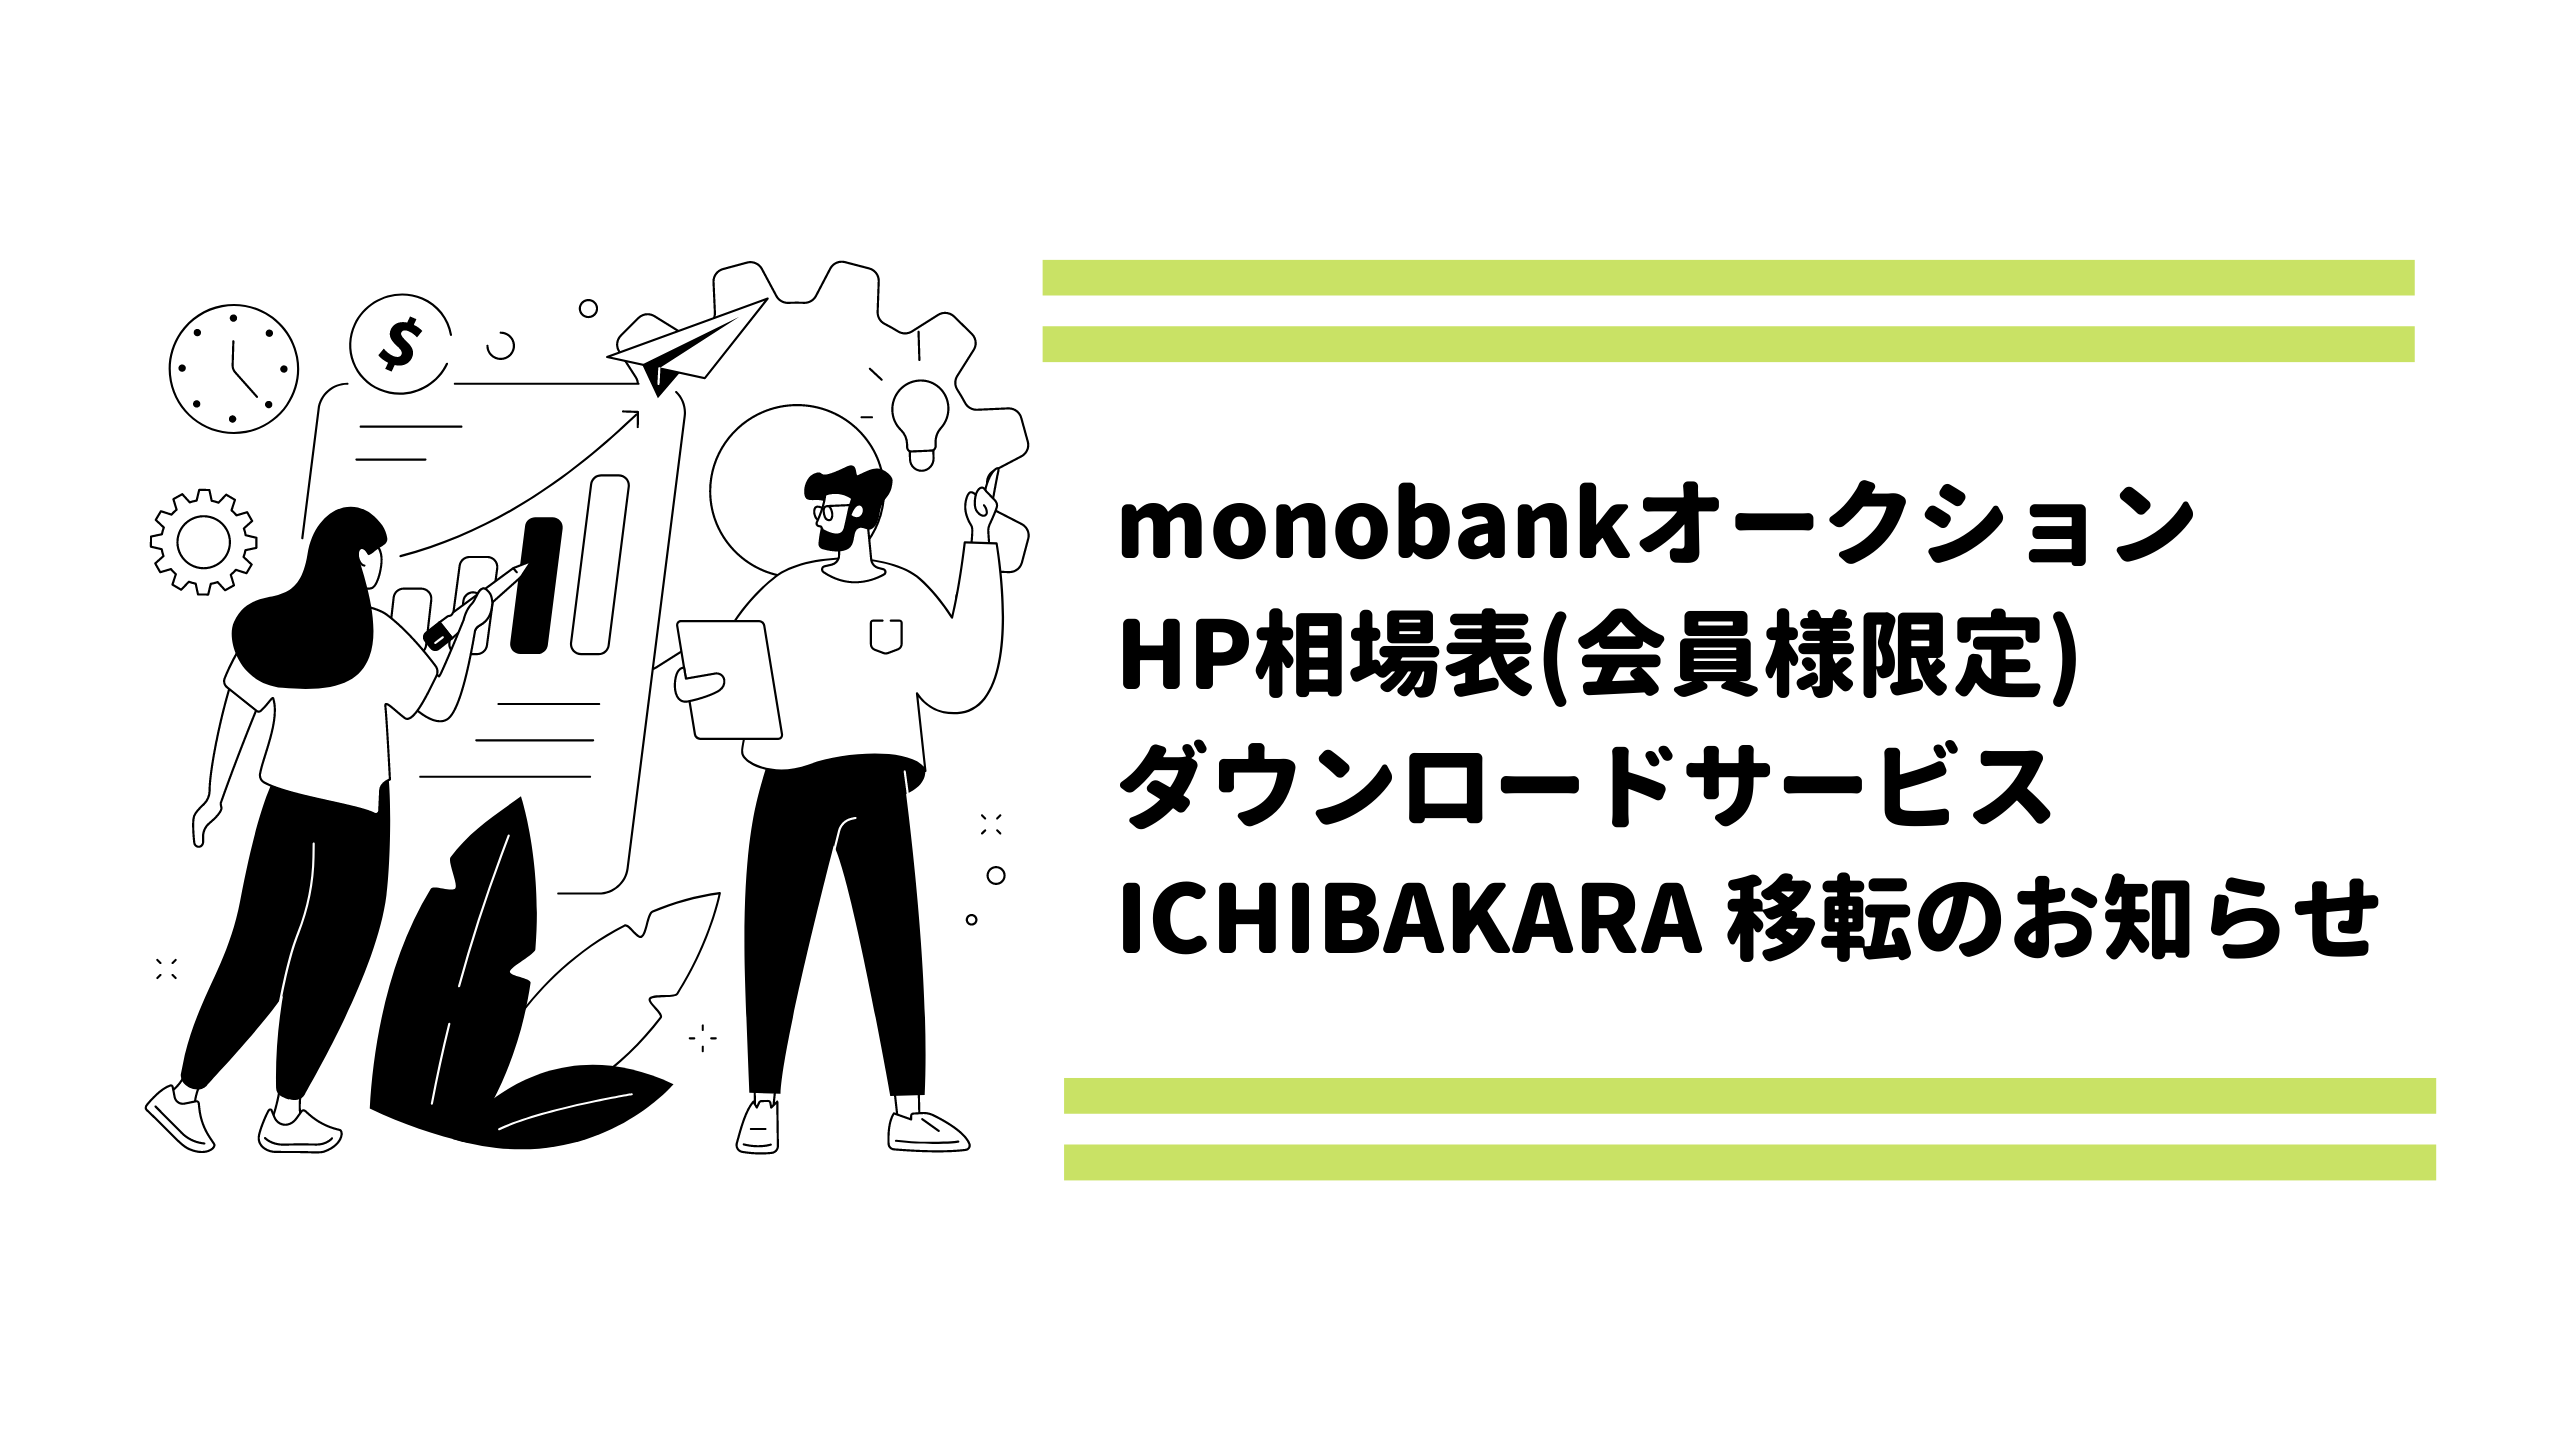 monobankオークションHP相場表(会員様限定)ダウンロードサービス移転のお知らせ